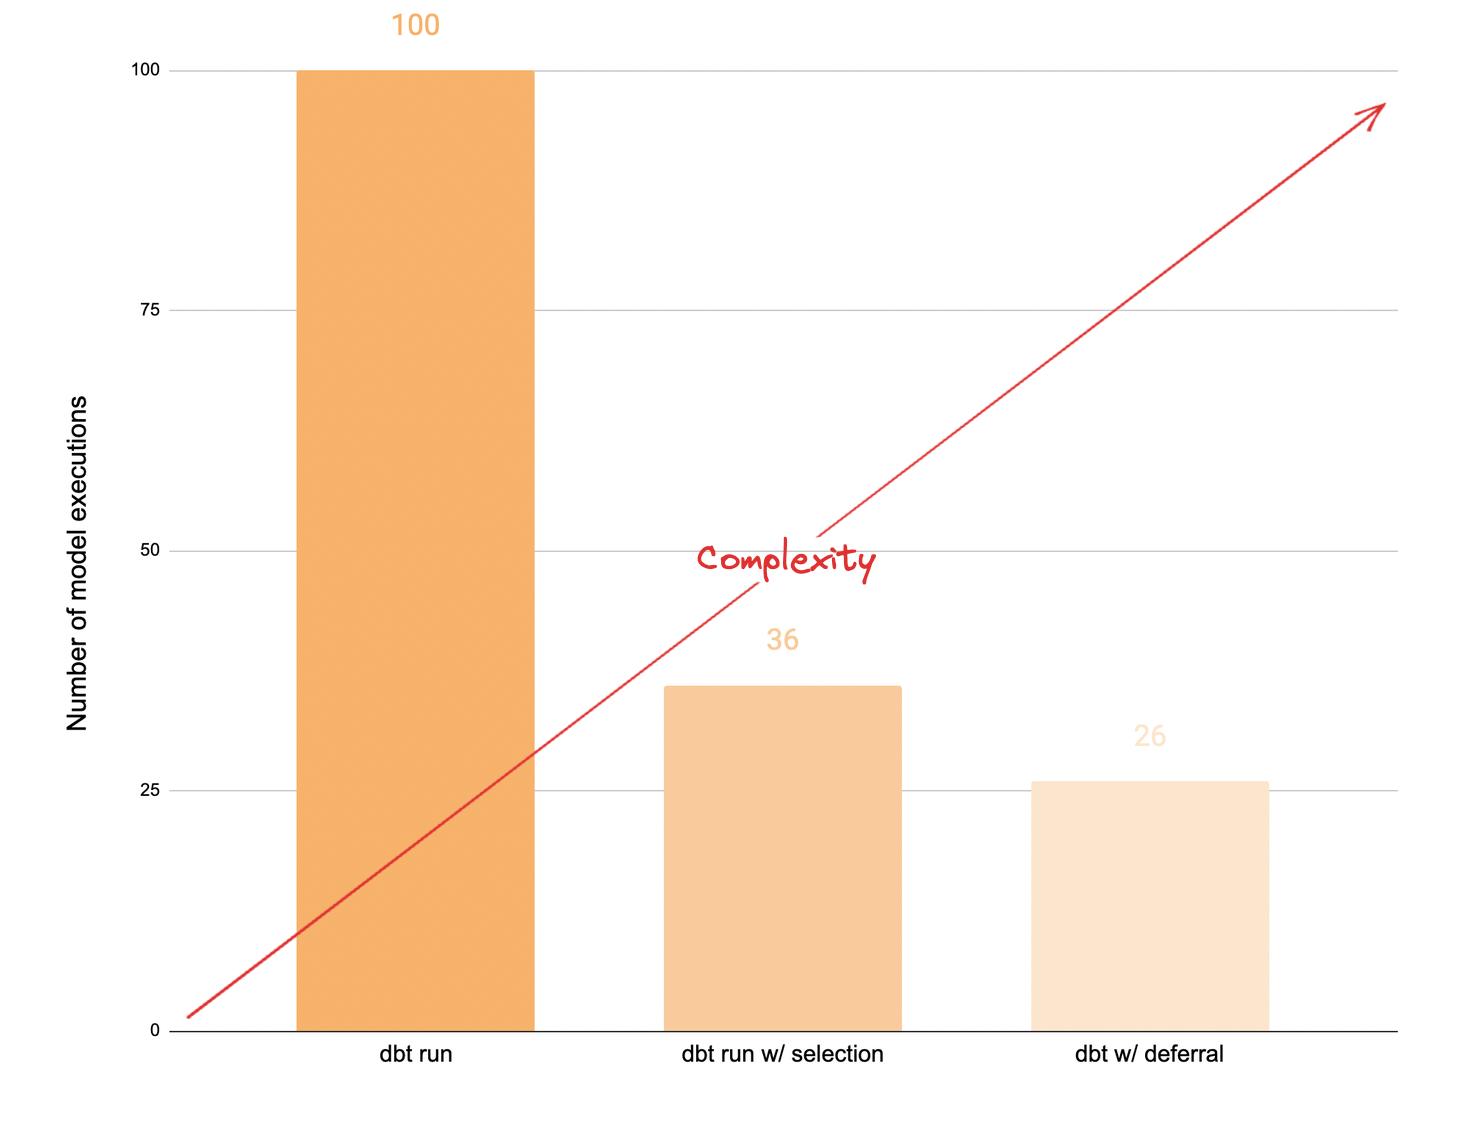 Figure 6: Complexity vs efficiency in dbt